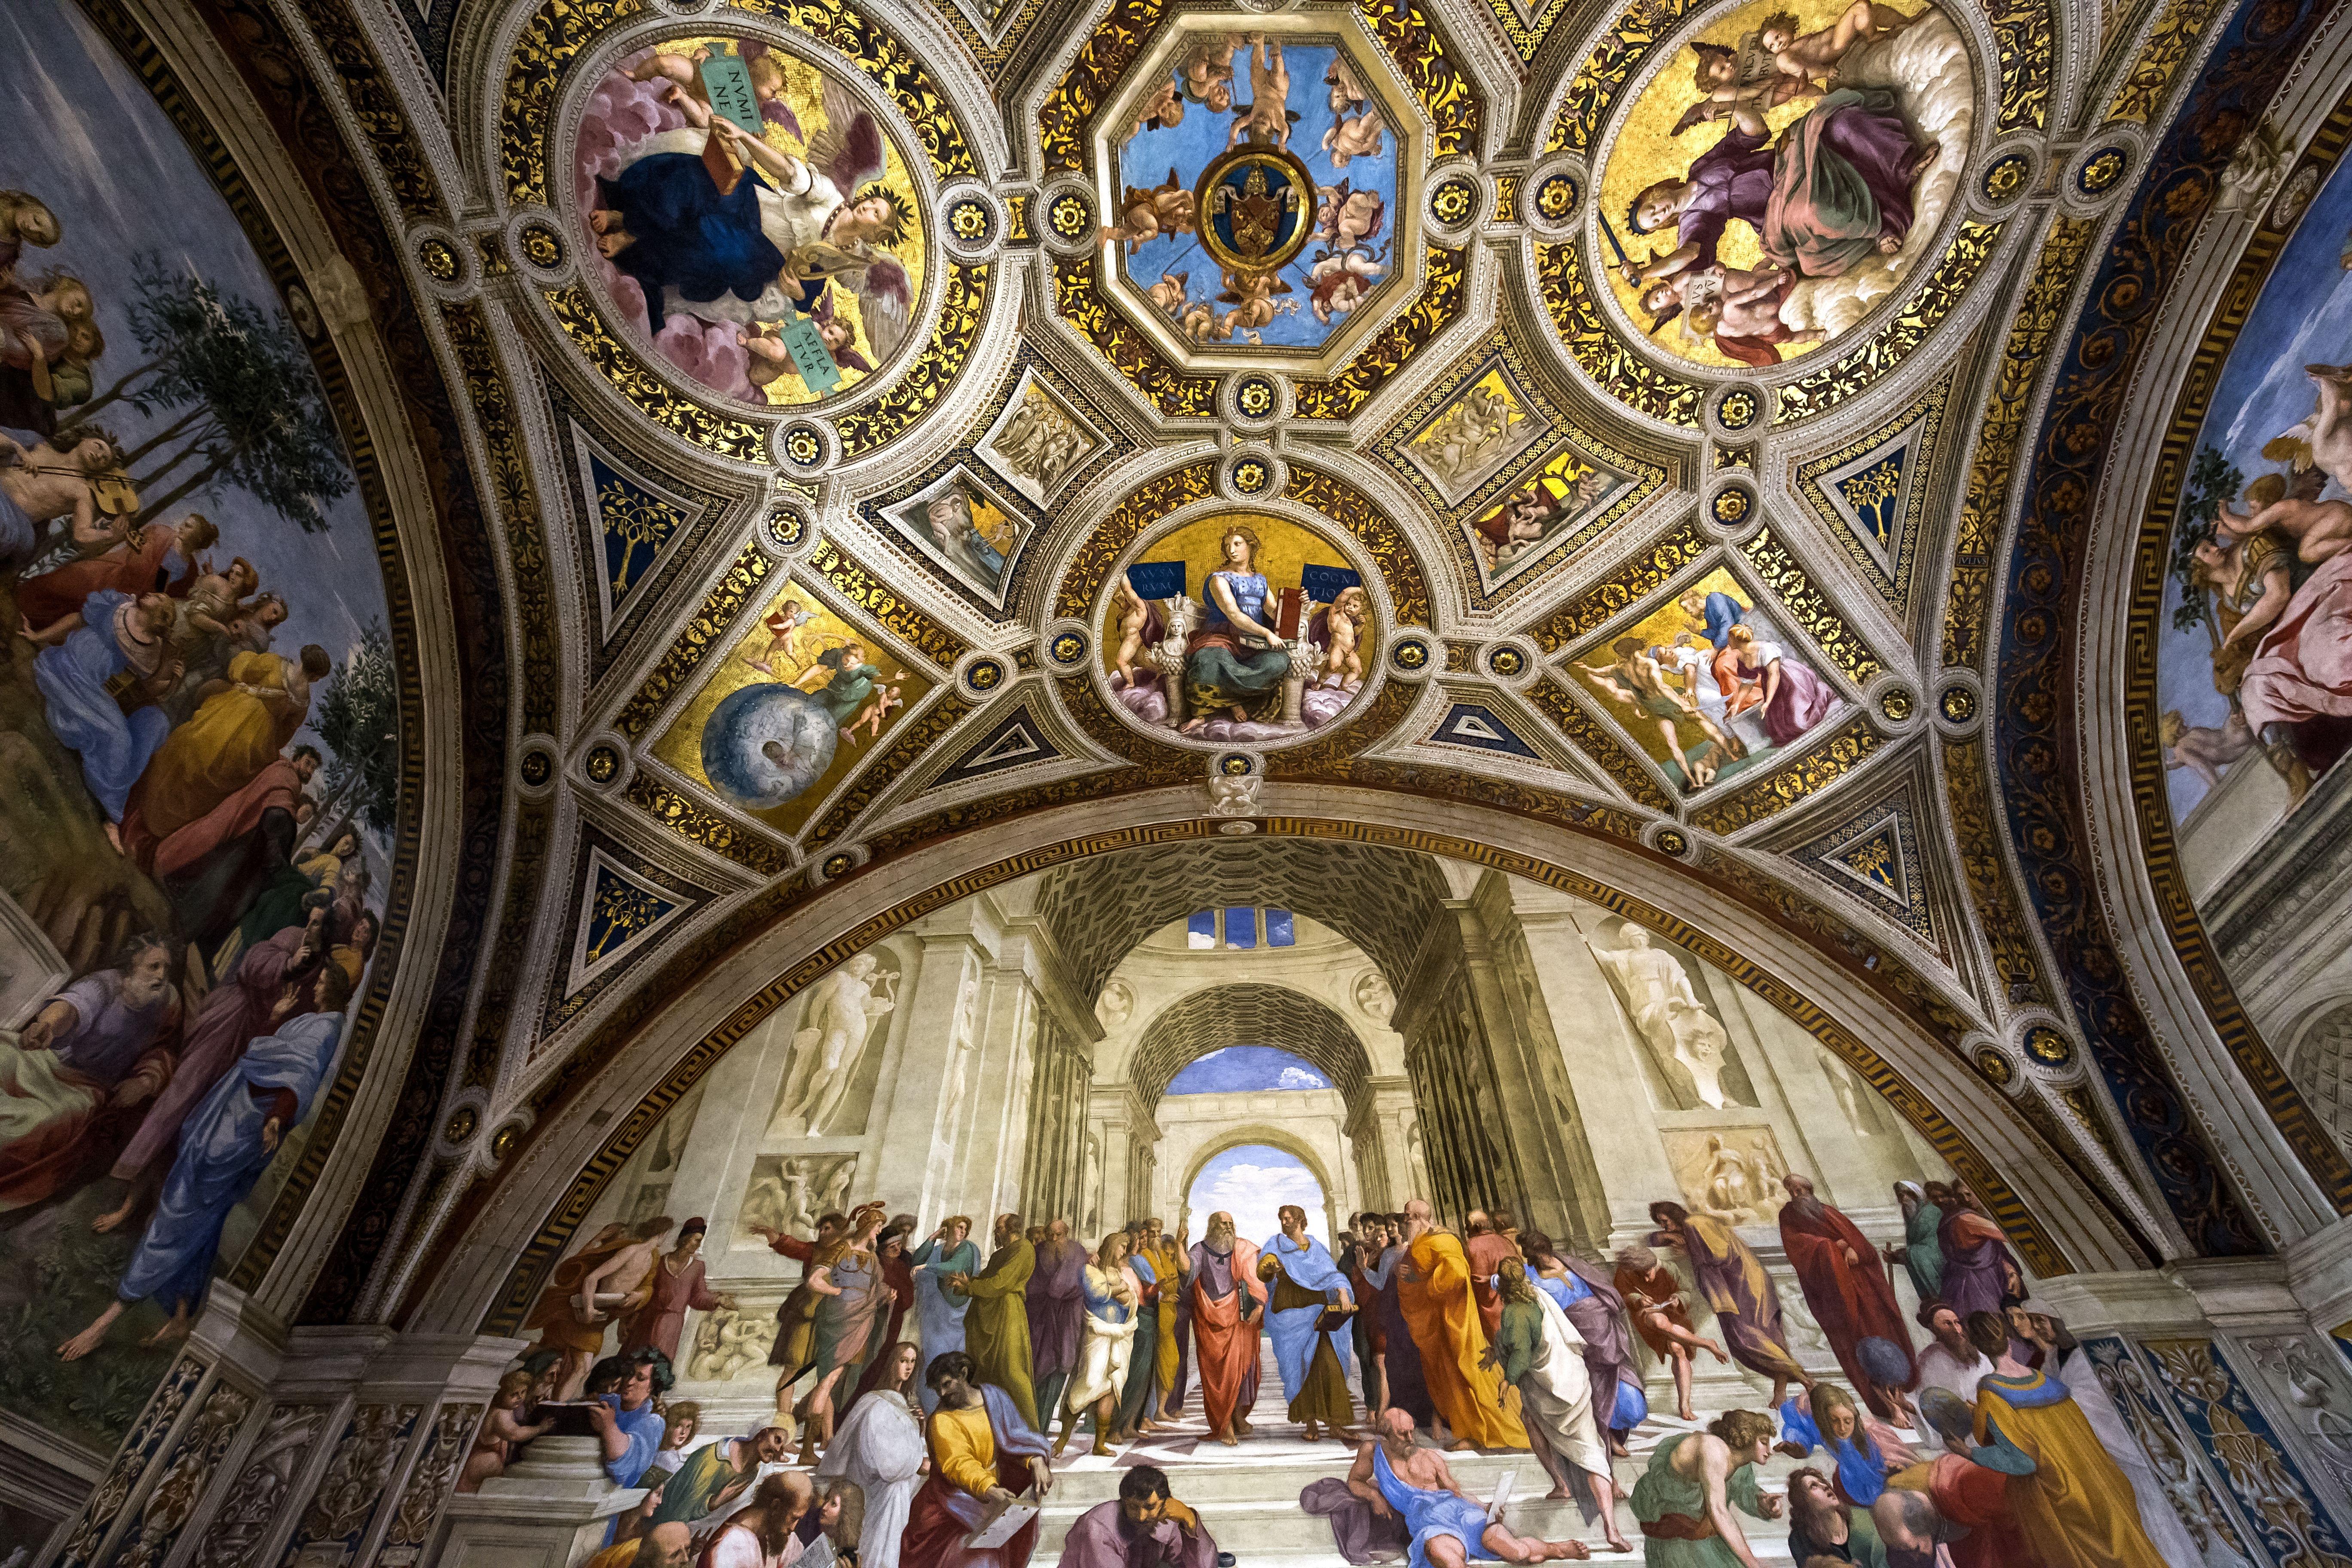 Visiting Vatican Museums